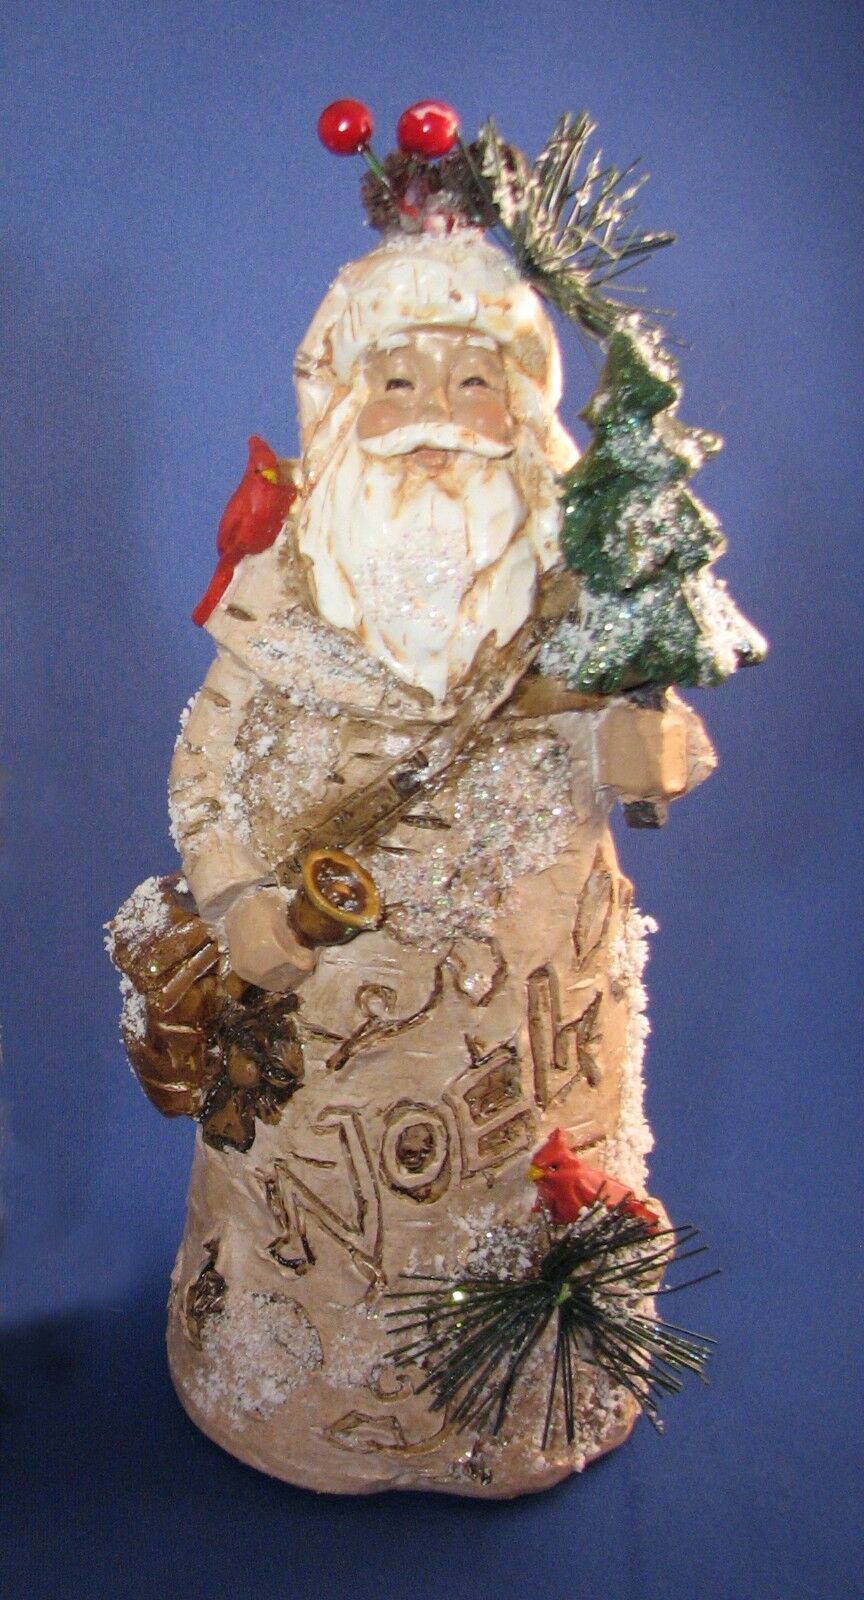 Delightful Christmas Noel Santa Figurine Holiday Winter Home Decor  